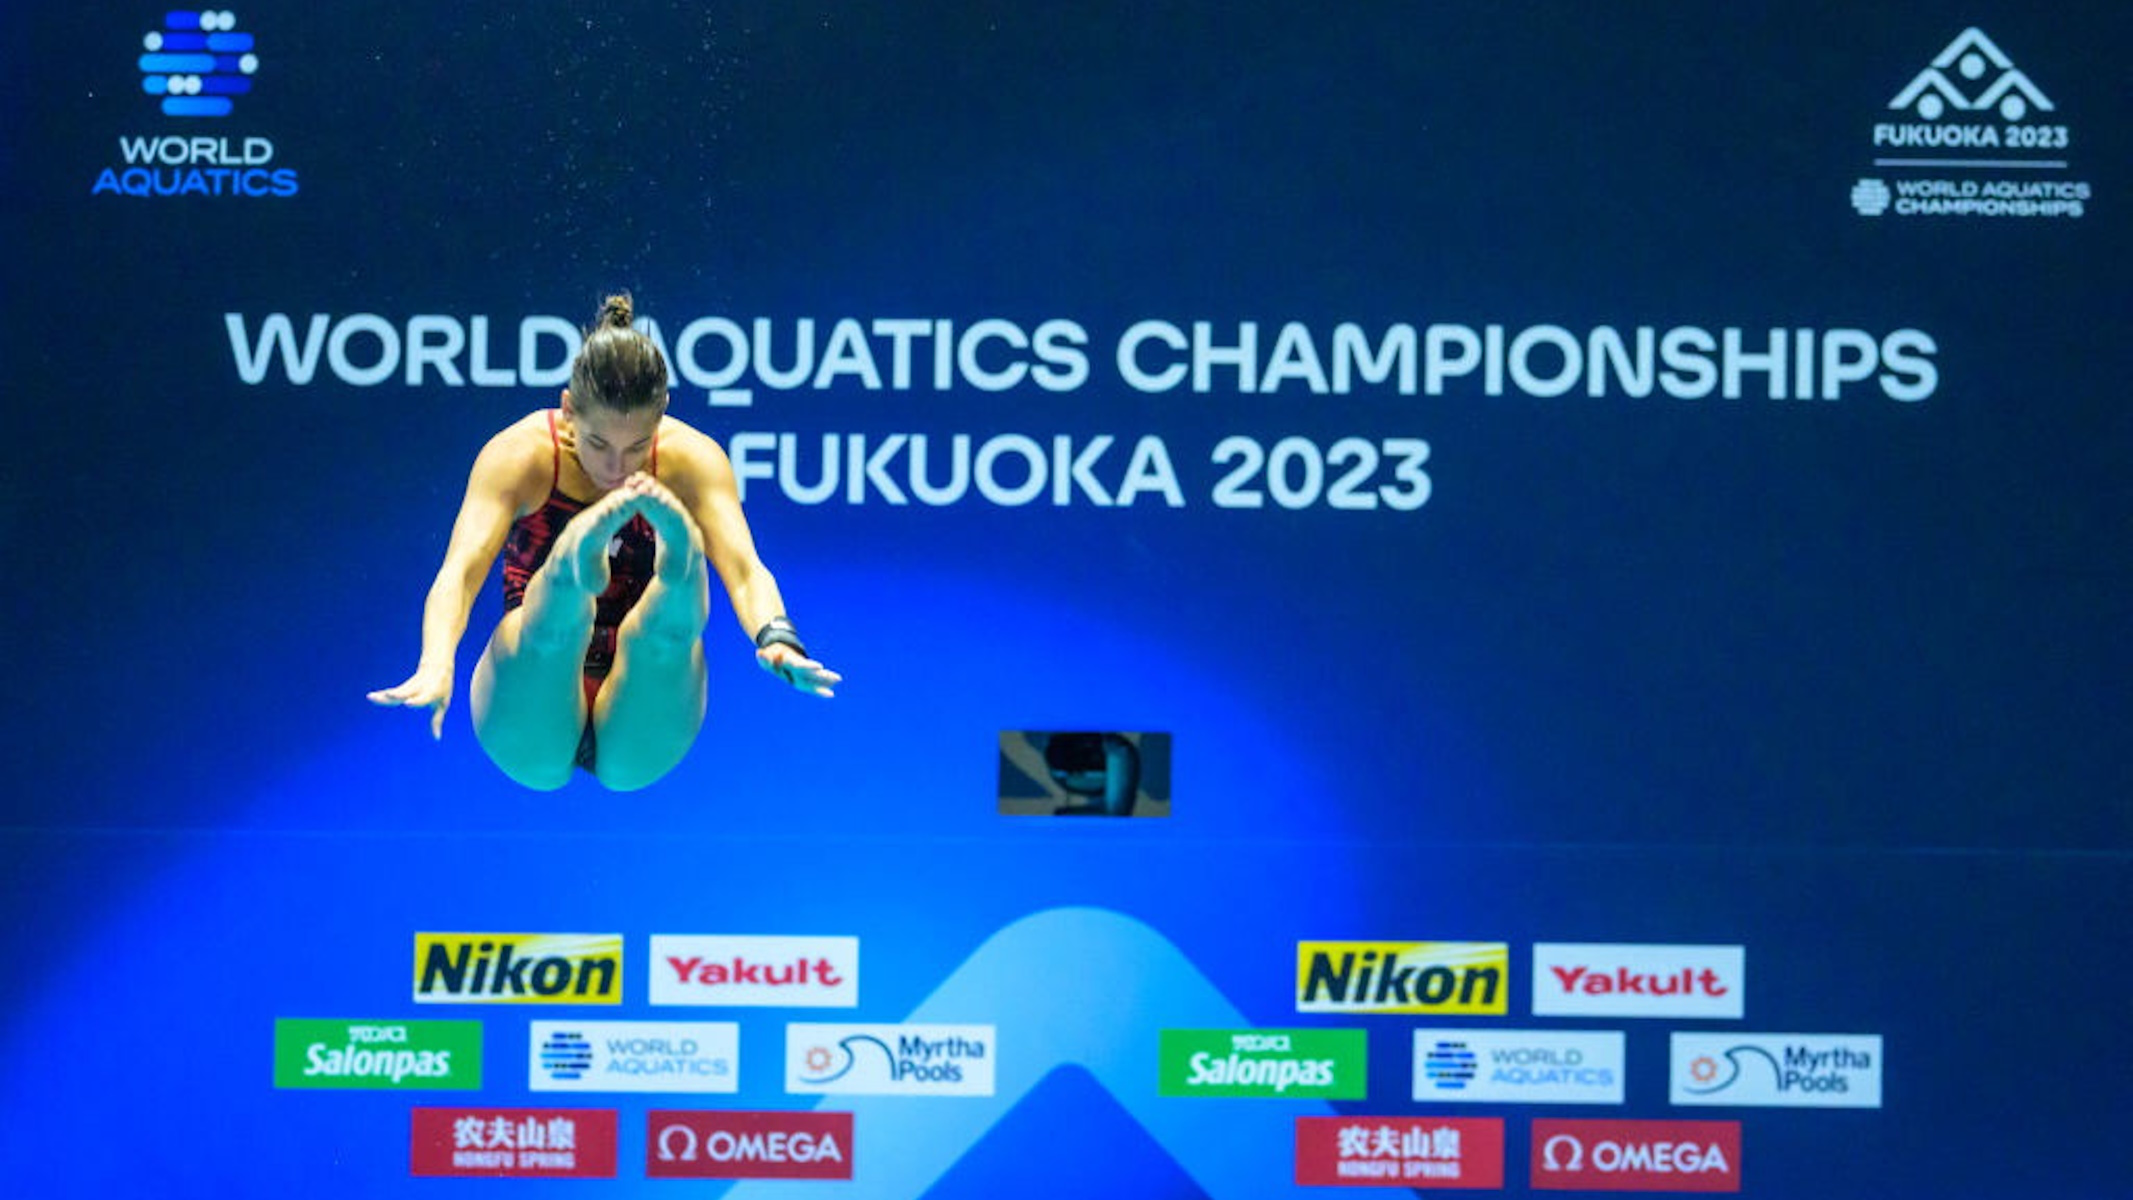 Mondiali di nuoto Fukuoka 2023